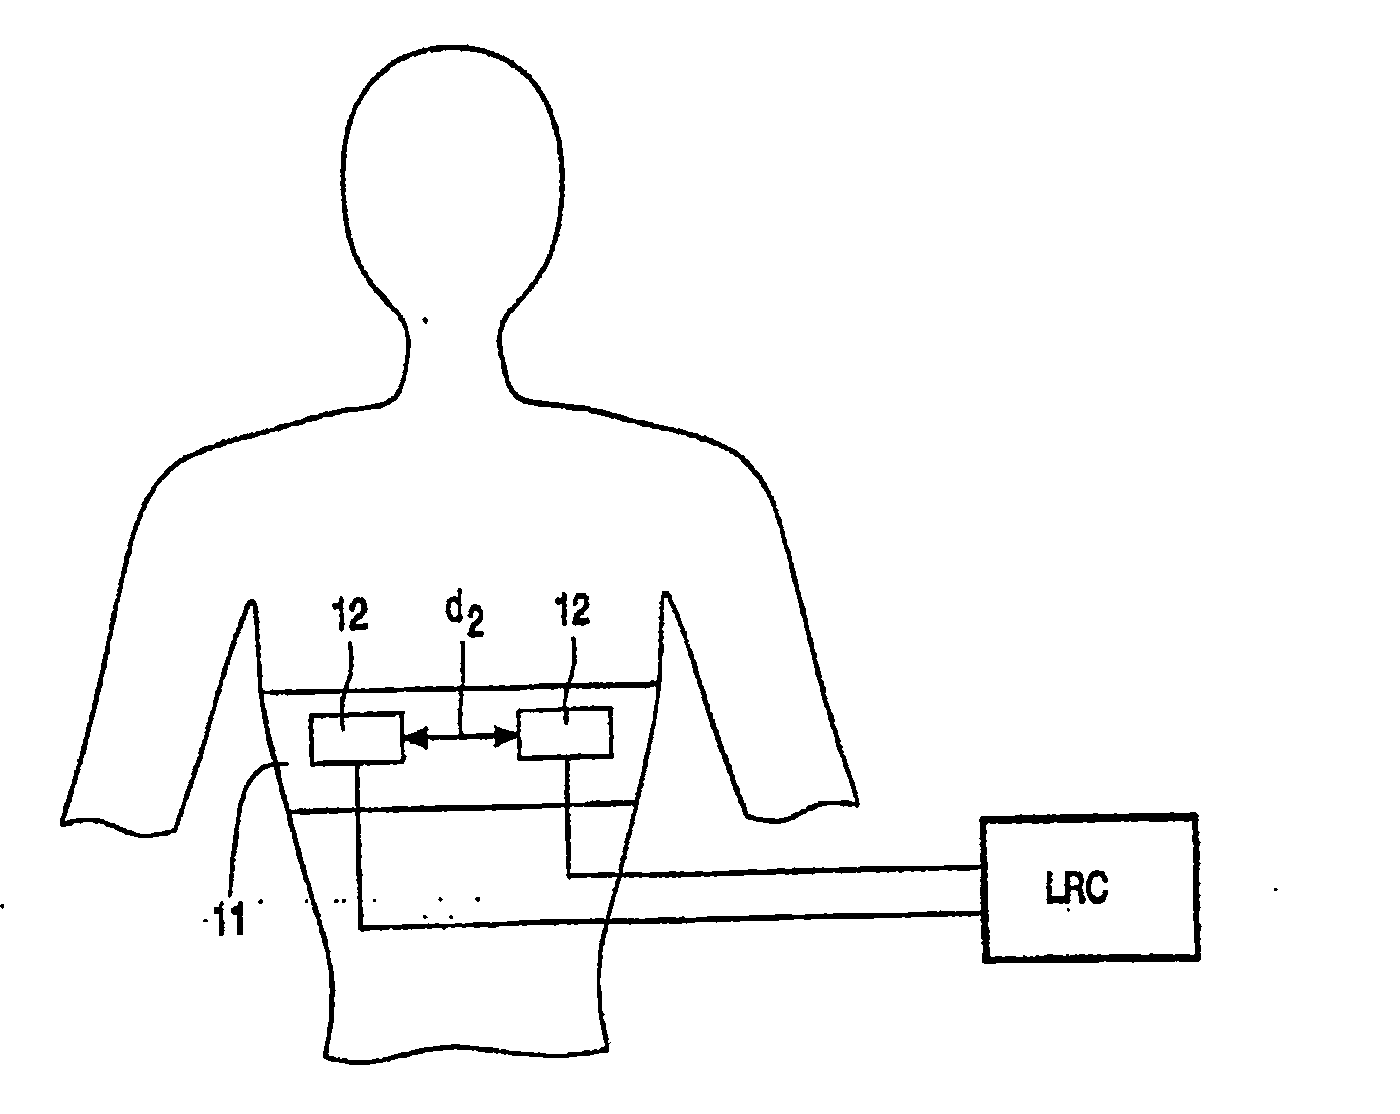 Electrode arrangement